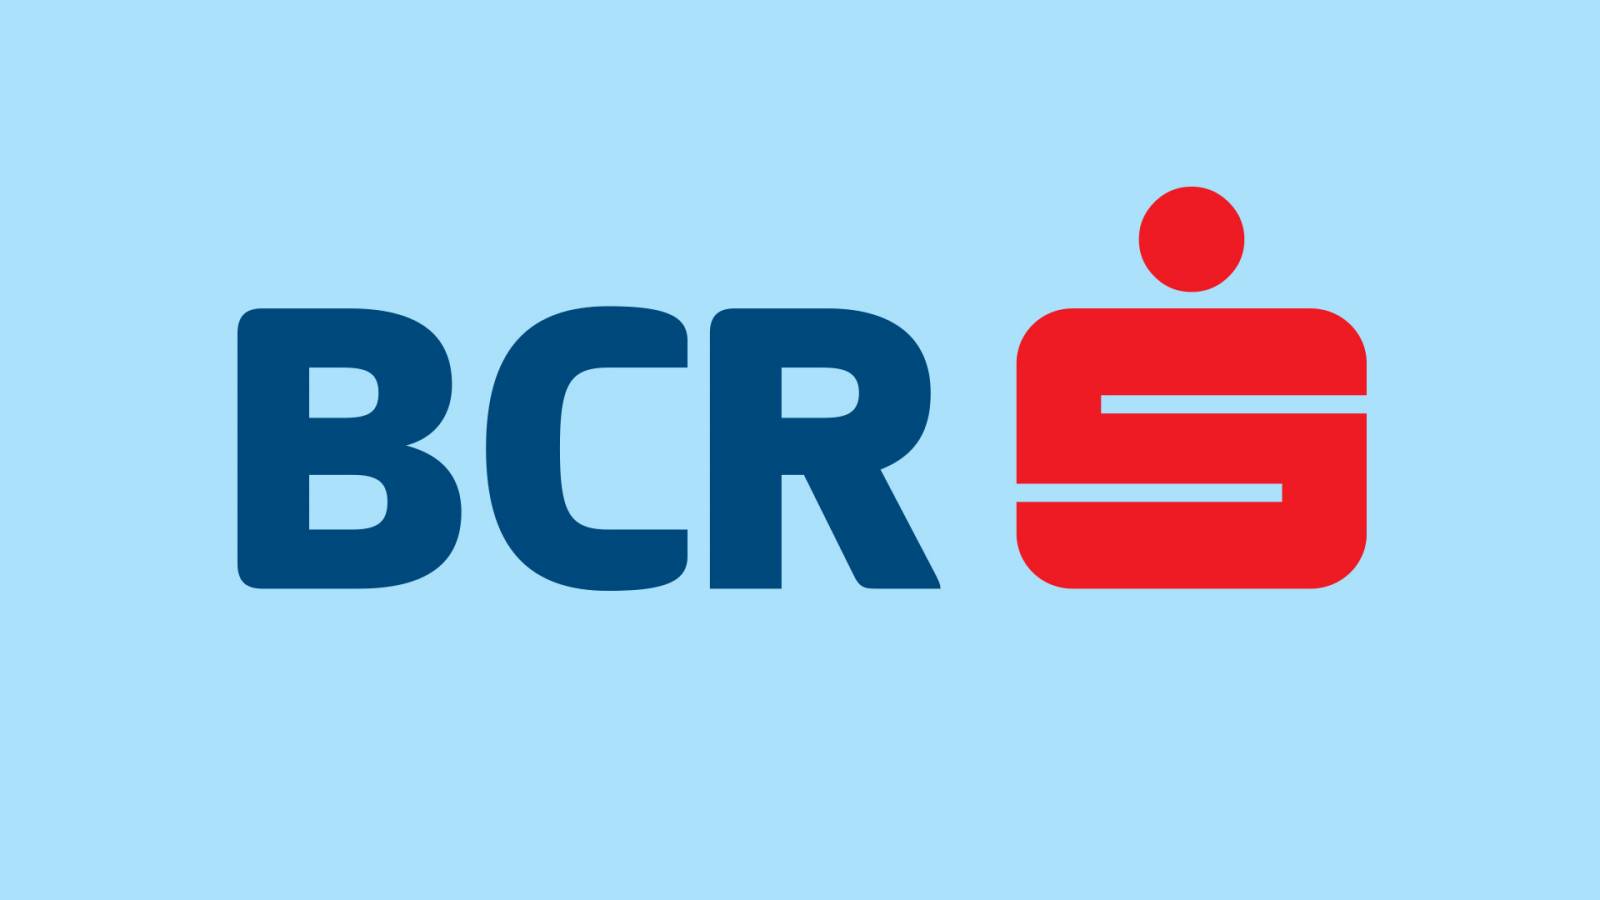 BCR Romania retrageri